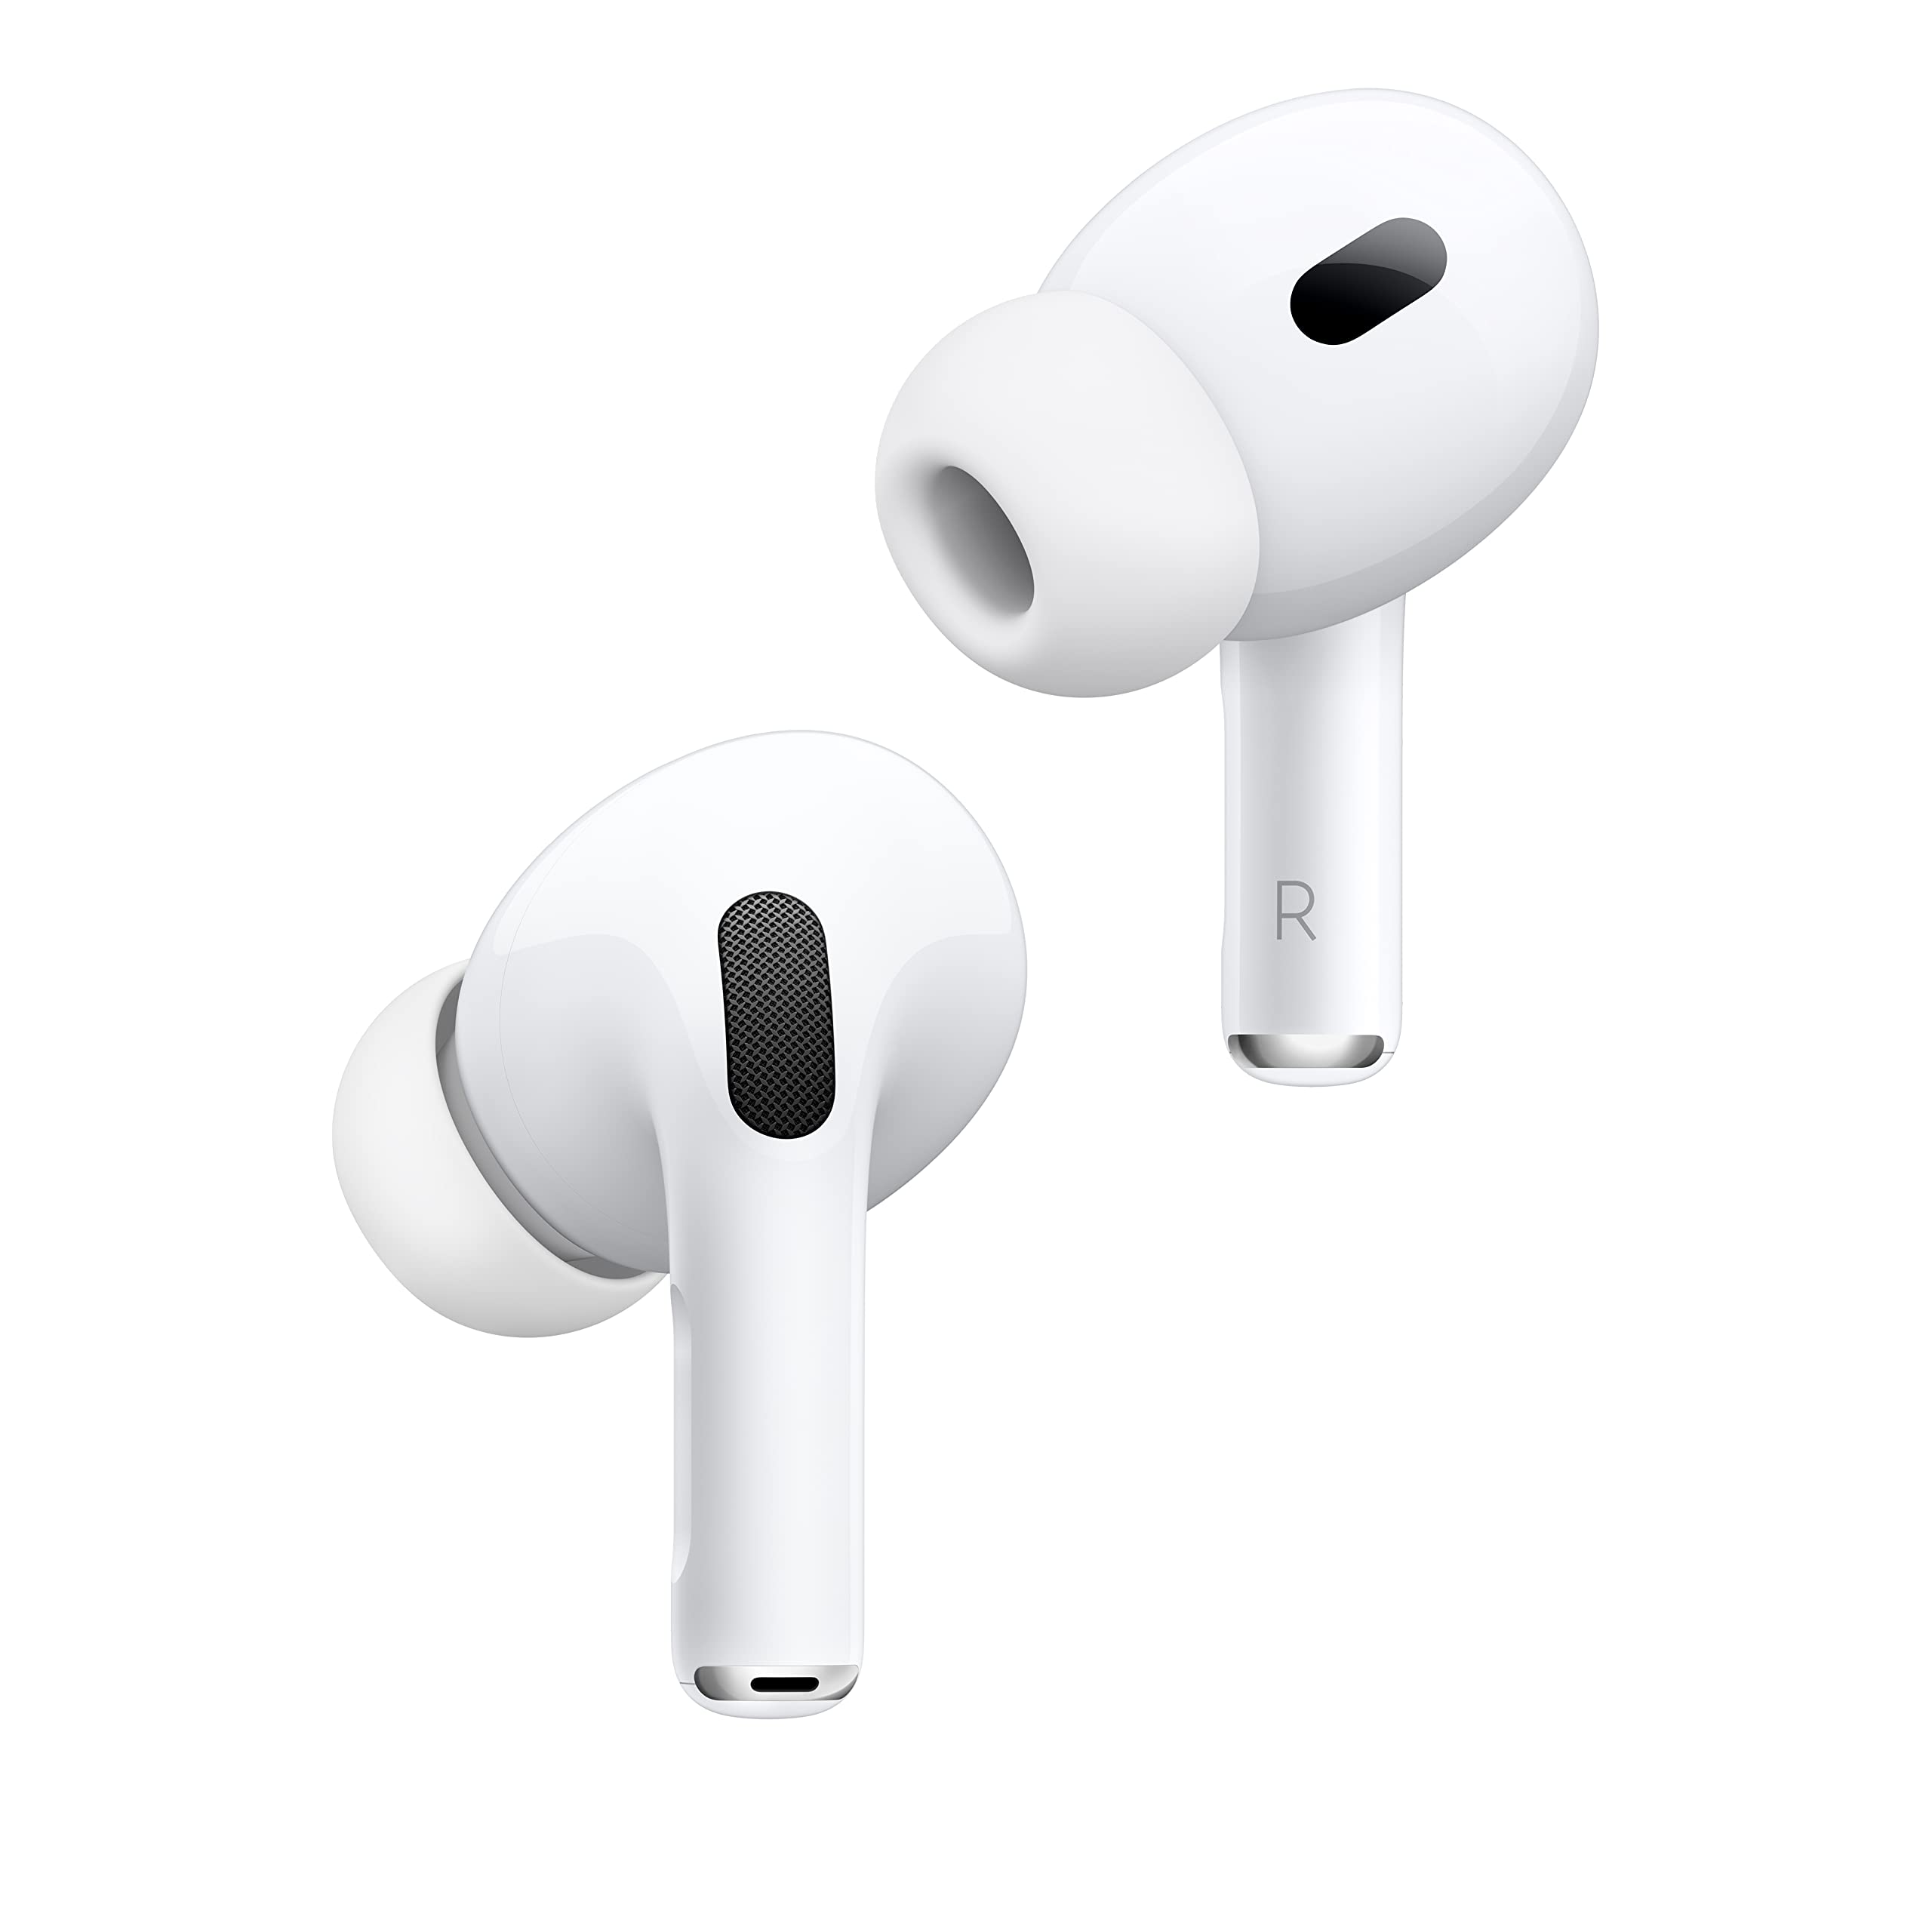 Apple AirPods Pro（第 2 代）无线耳塞、主动降噪功能提升 2 倍、自适应透明度、个性化空间音频、MagSafe 充电盒、iPhone 蓝牙耳机